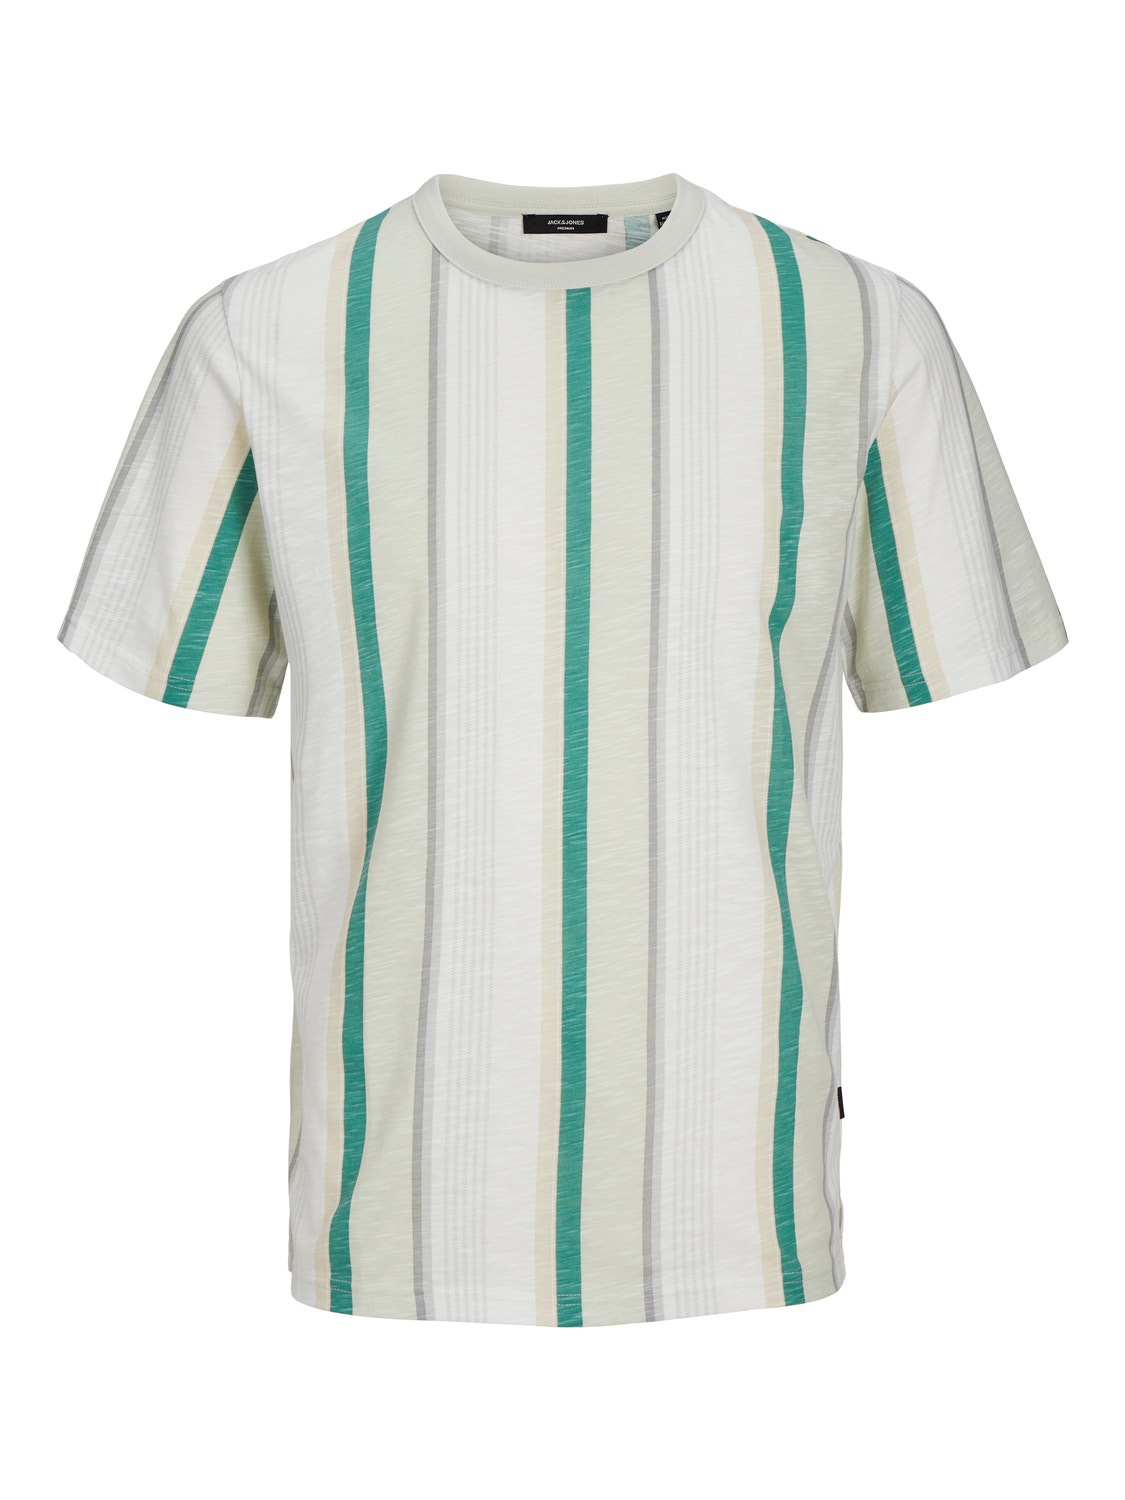 Jack & Jones Camiseta All Over Print Cuello redondo -Green Tint - 12253552